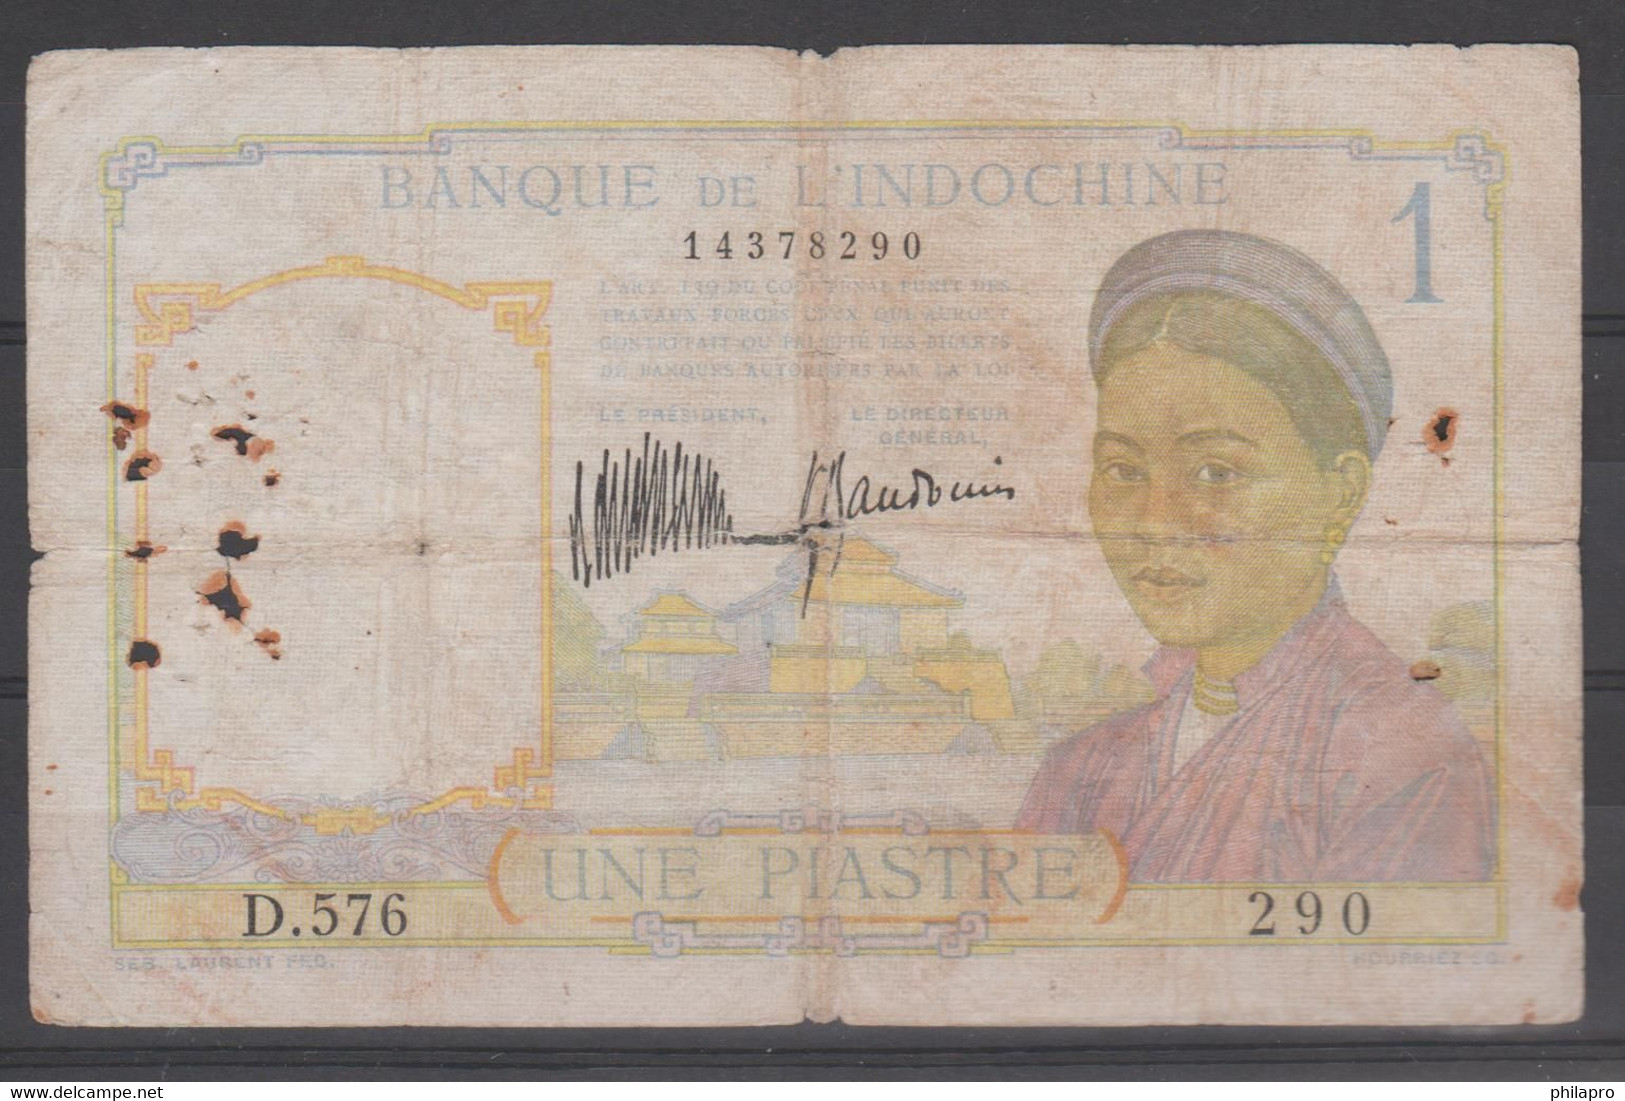 INDOCHINE  CAMBODGE LAOS VIETNAM  Banknote BLUE NUMERAL 1  PICK N°52  F - Indochine